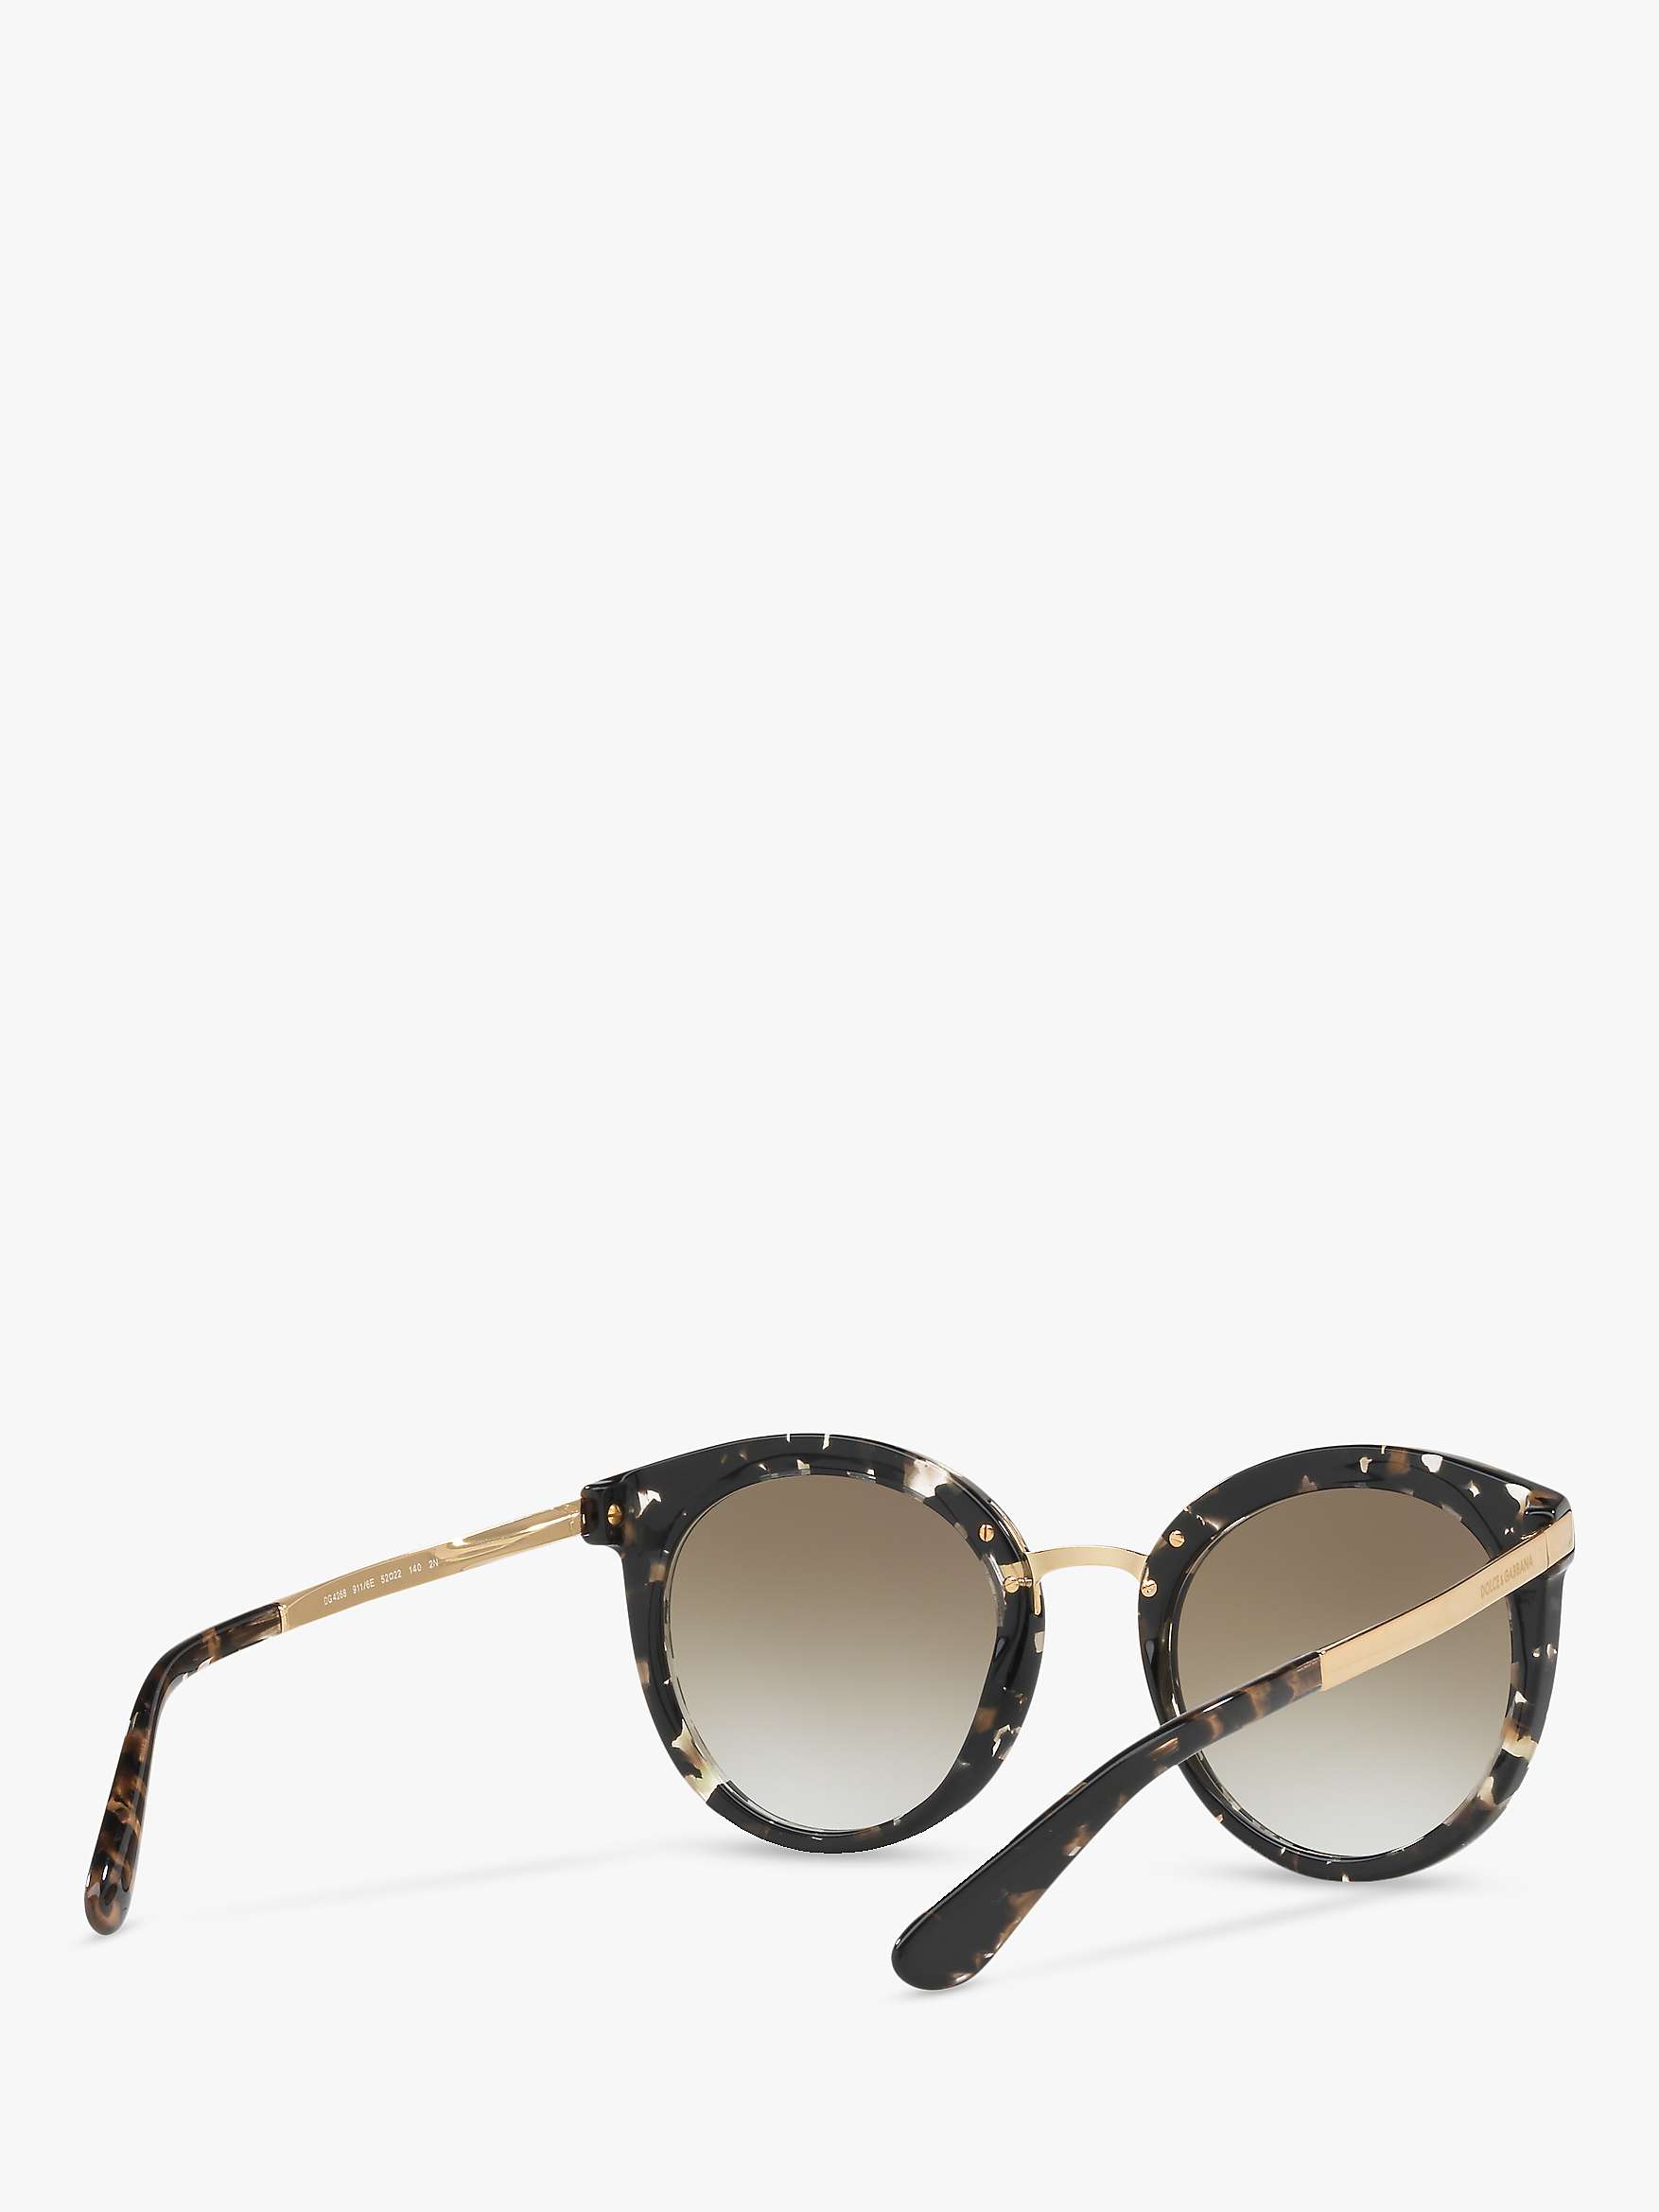 Buy Dolce & Gabbana DG4268 Women's Round Sunglasses Online at johnlewis.com